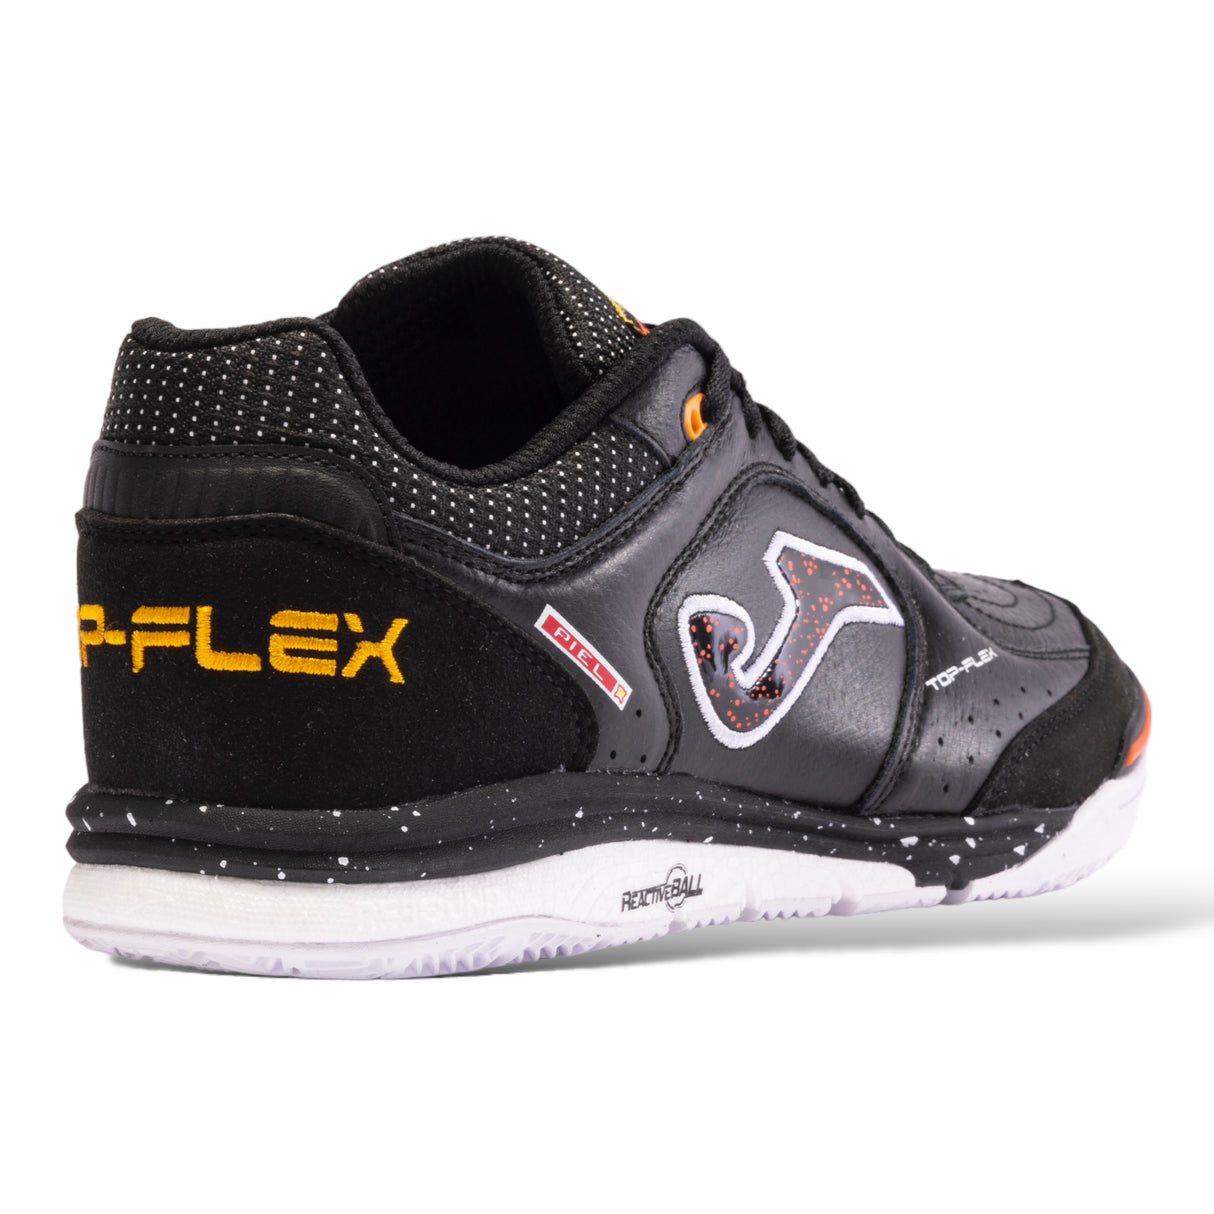 Joma Top Flex Rebound futsal chaussures de soccer interieur adulte - Noir / Orange